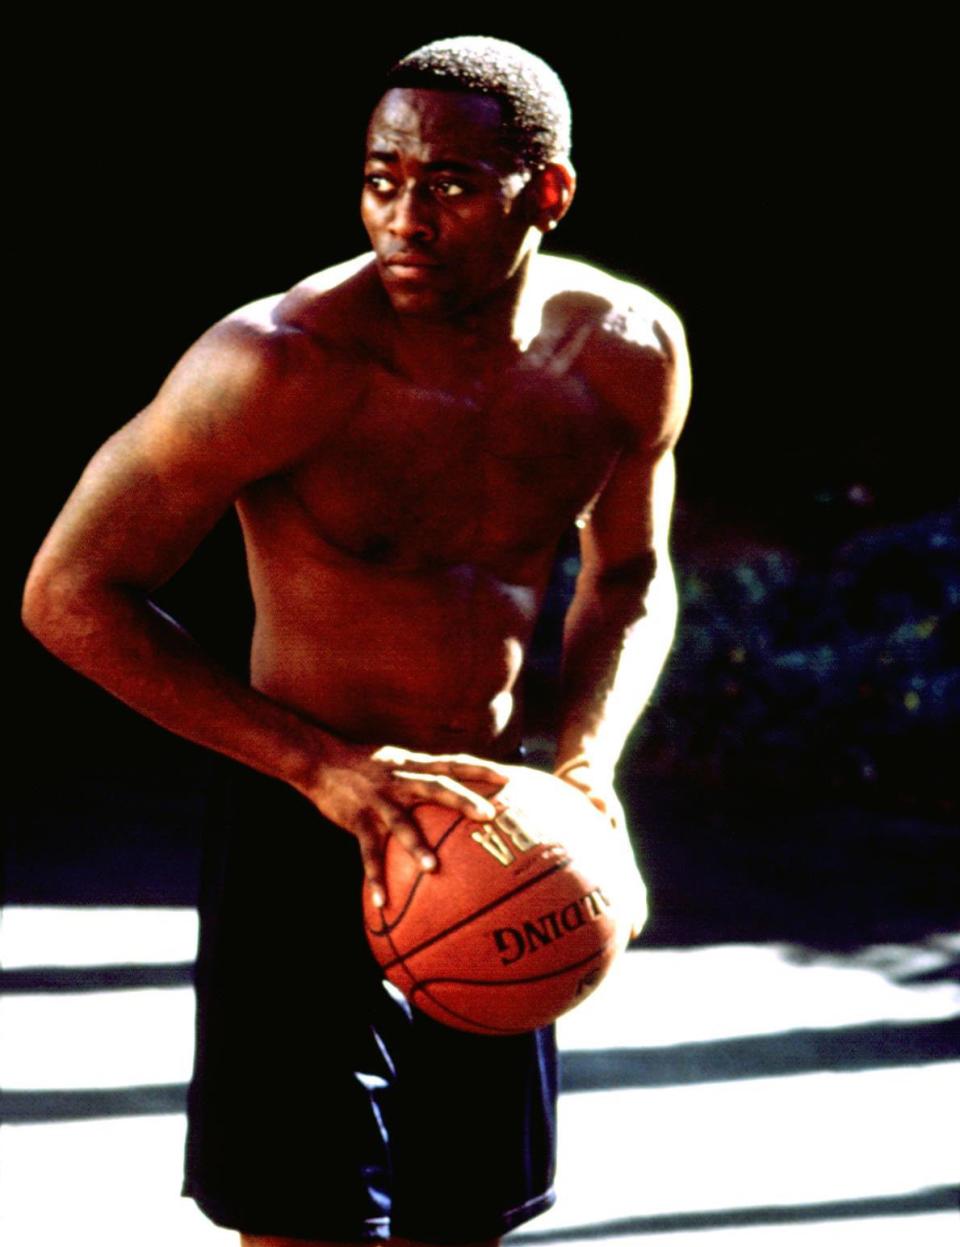 Bare-chested Omar playing basketball